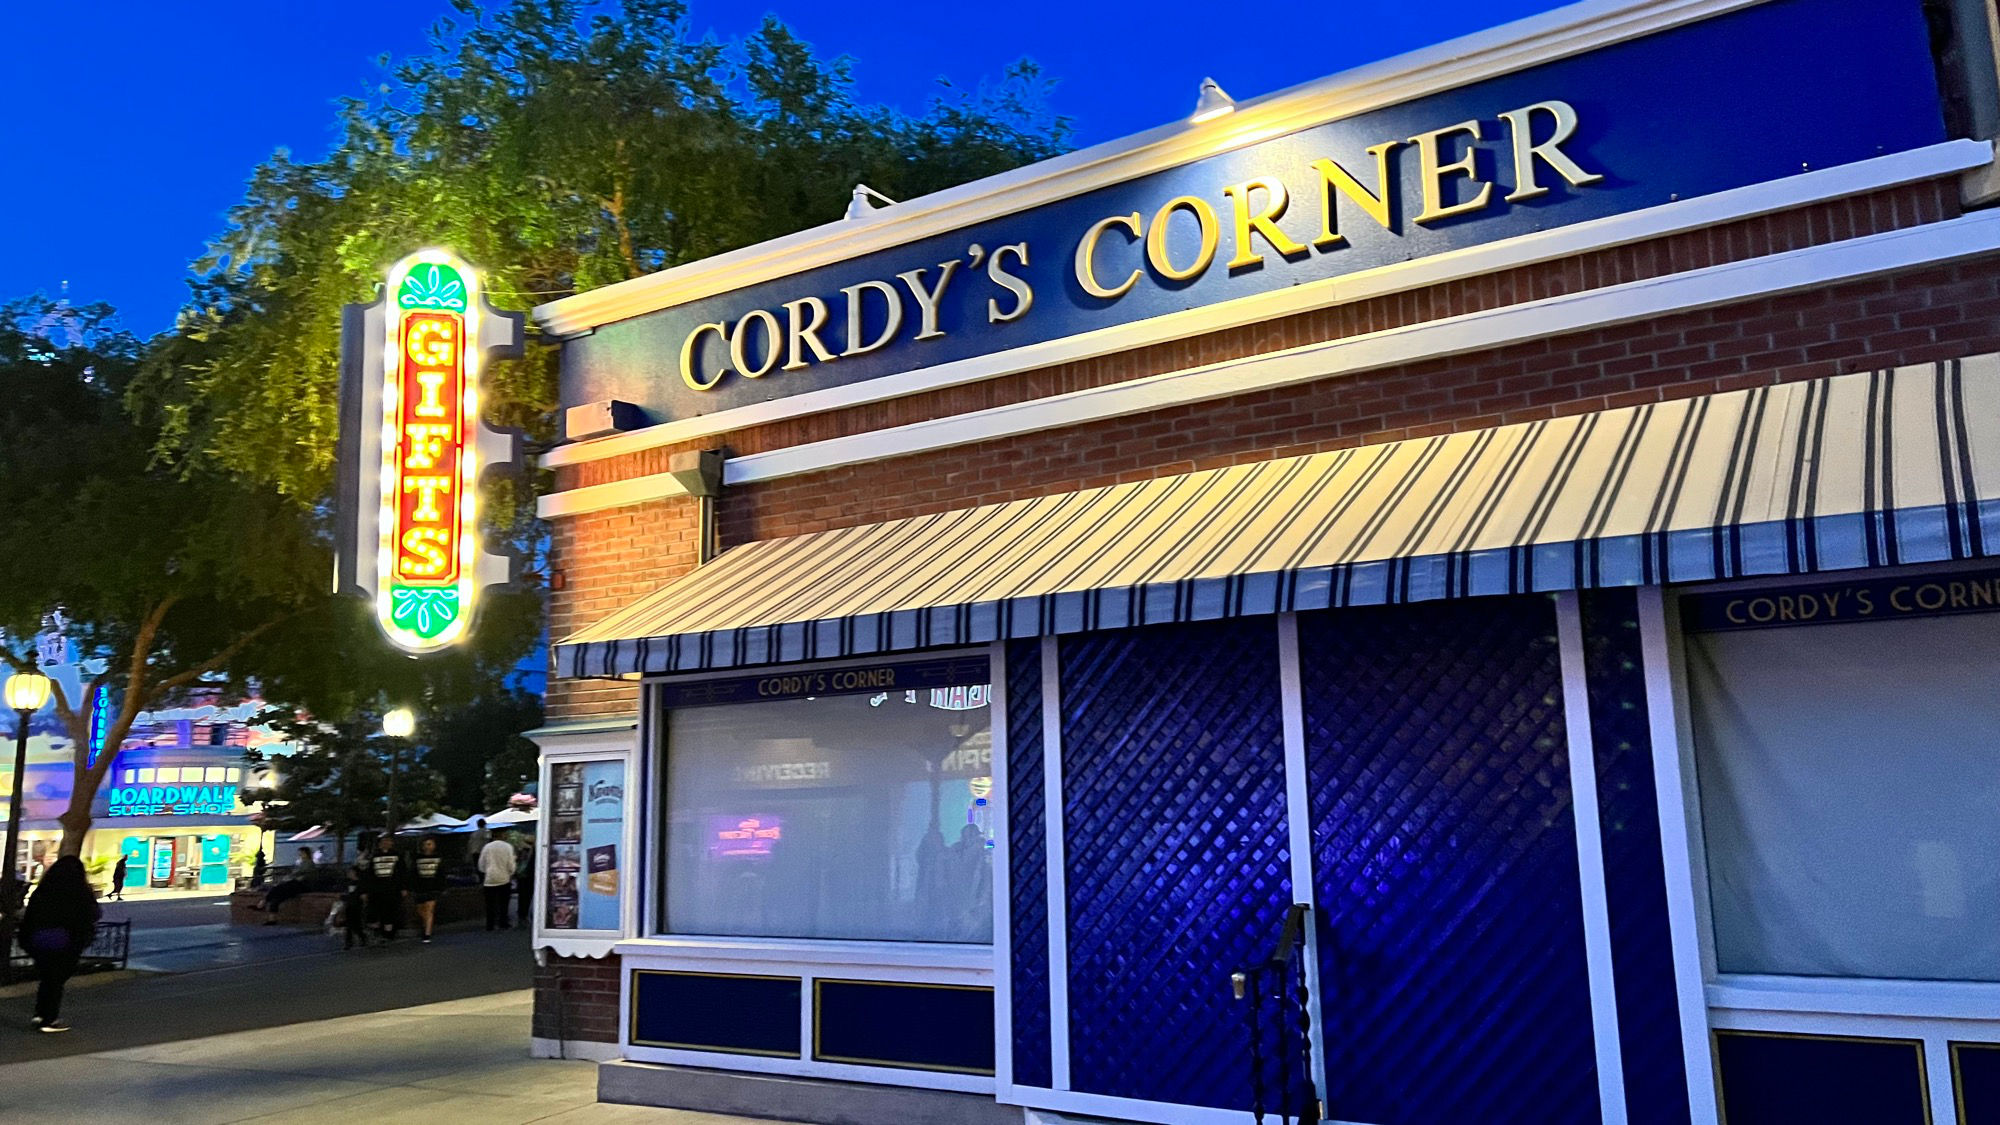 Cordy's Corner at Night